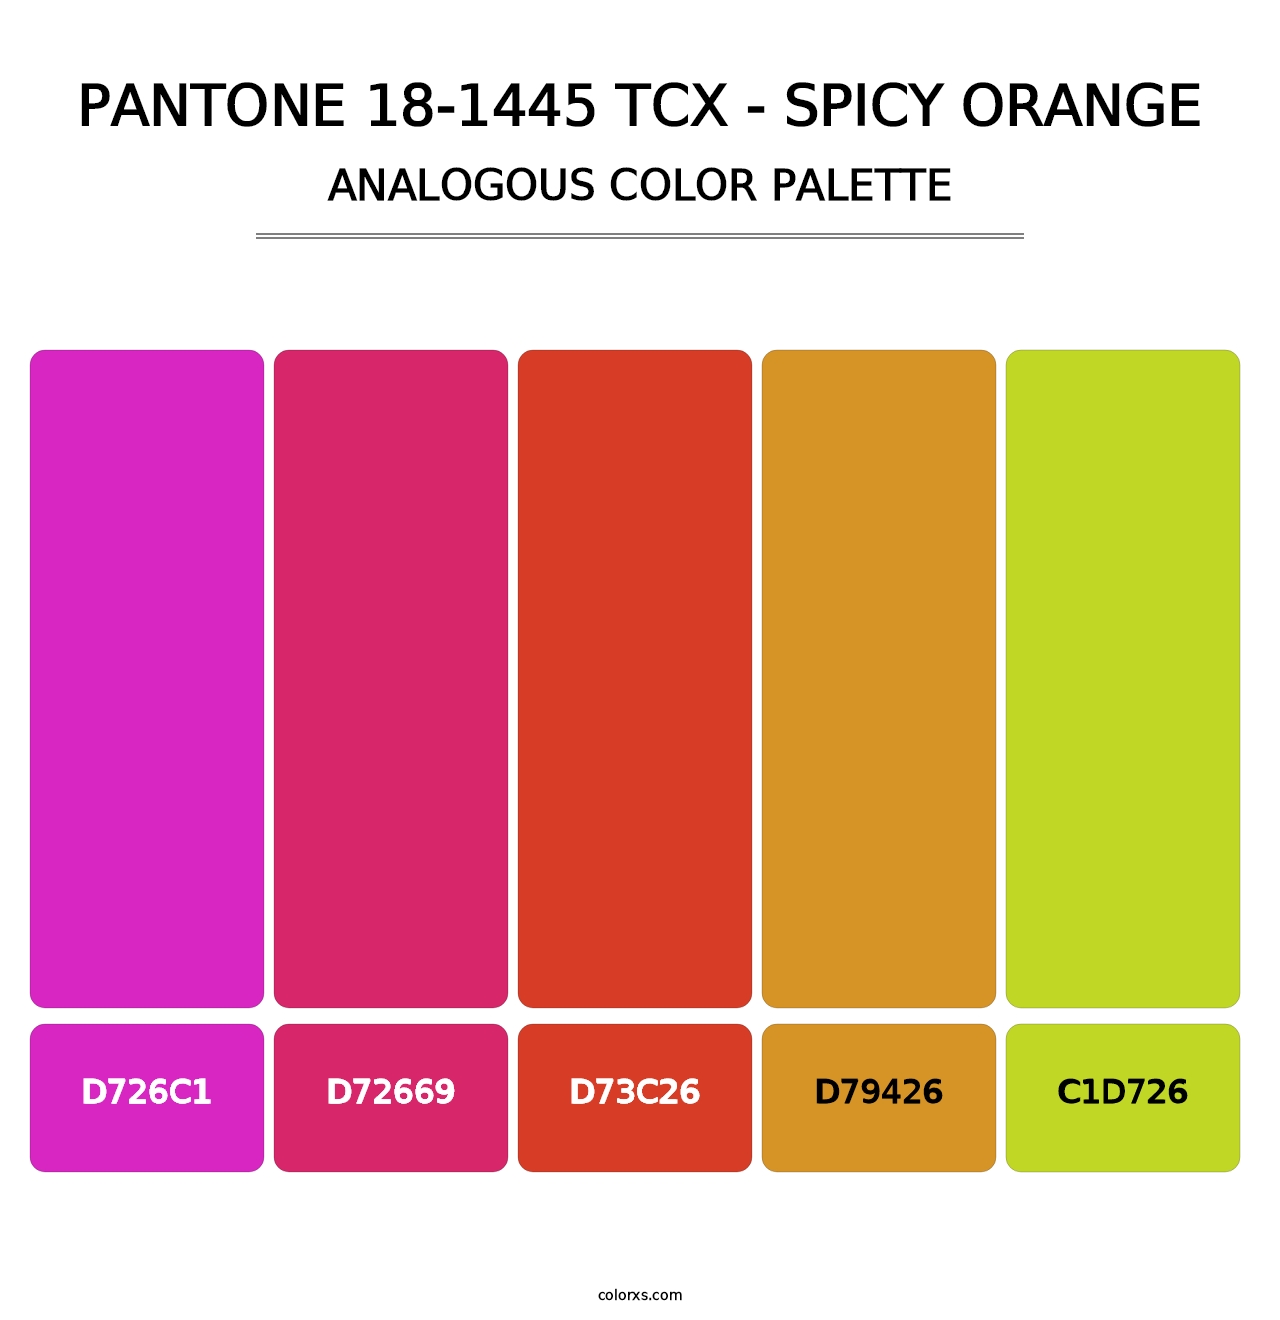 PANTONE 18-1445 TCX - Spicy Orange - Analogous Color Palette